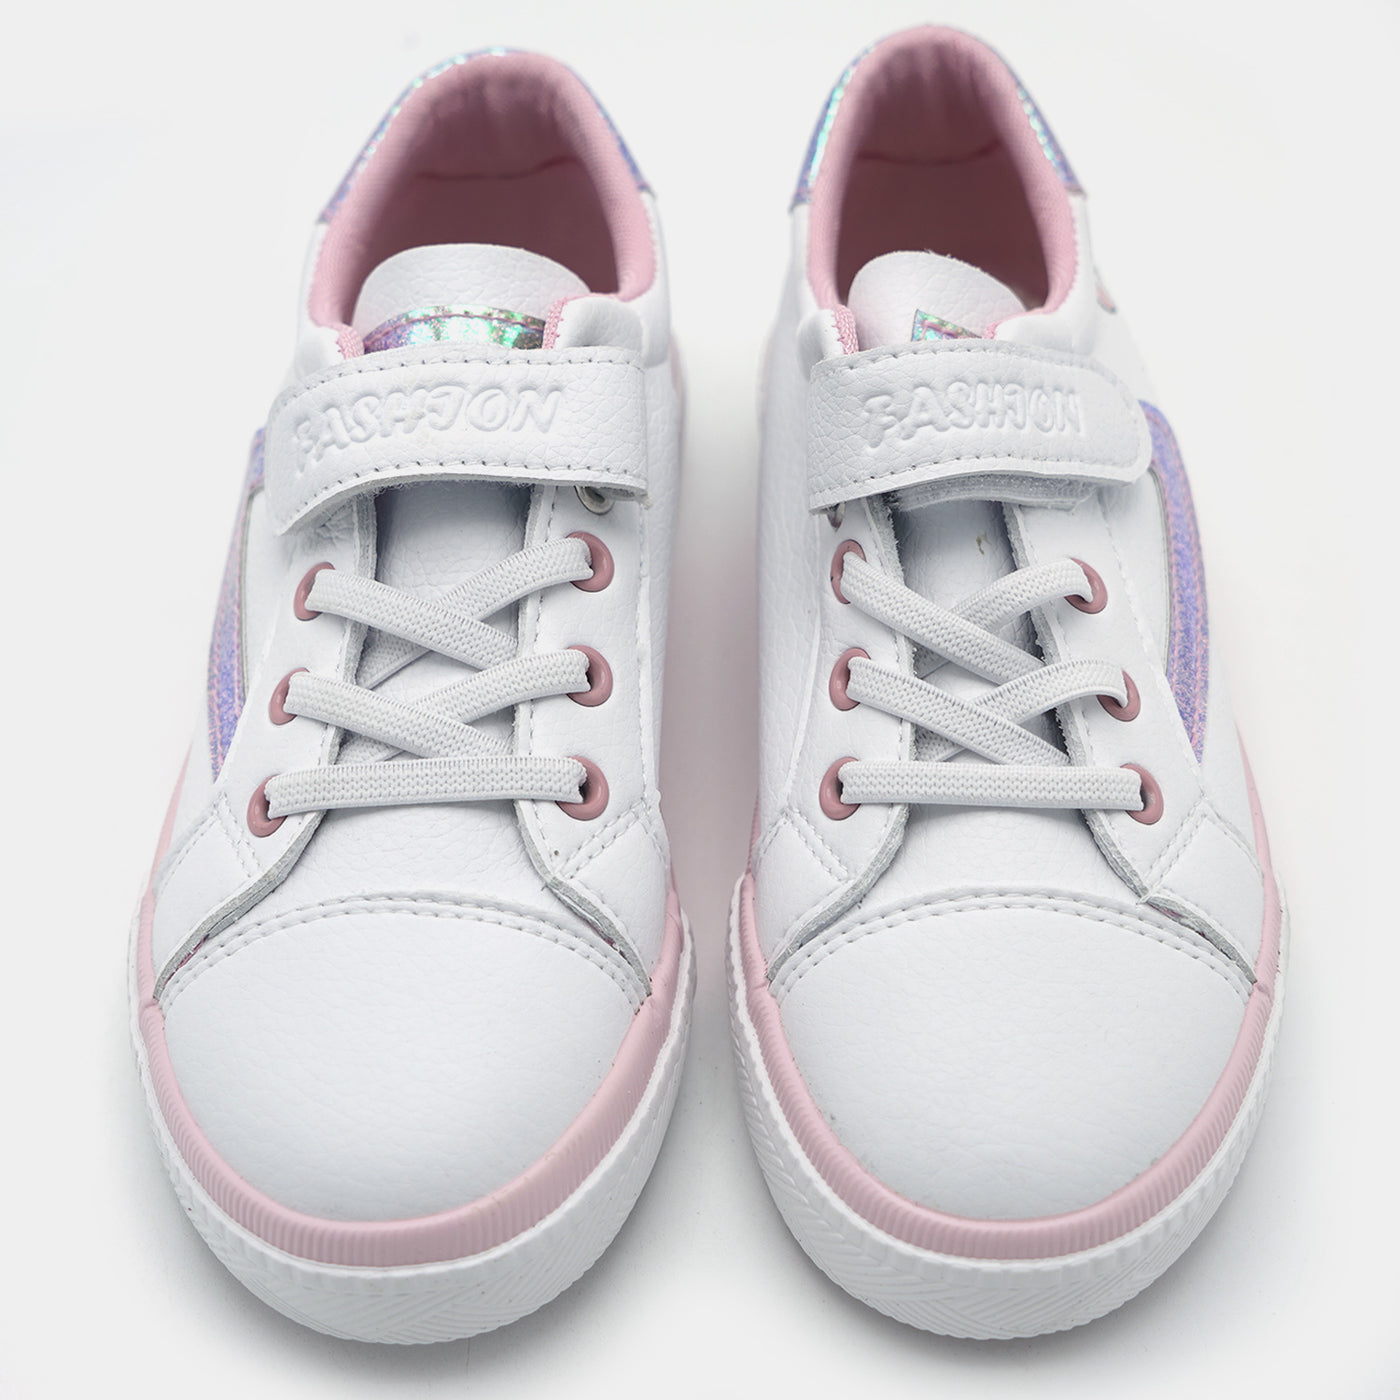 Girls Sneakers 5801-White